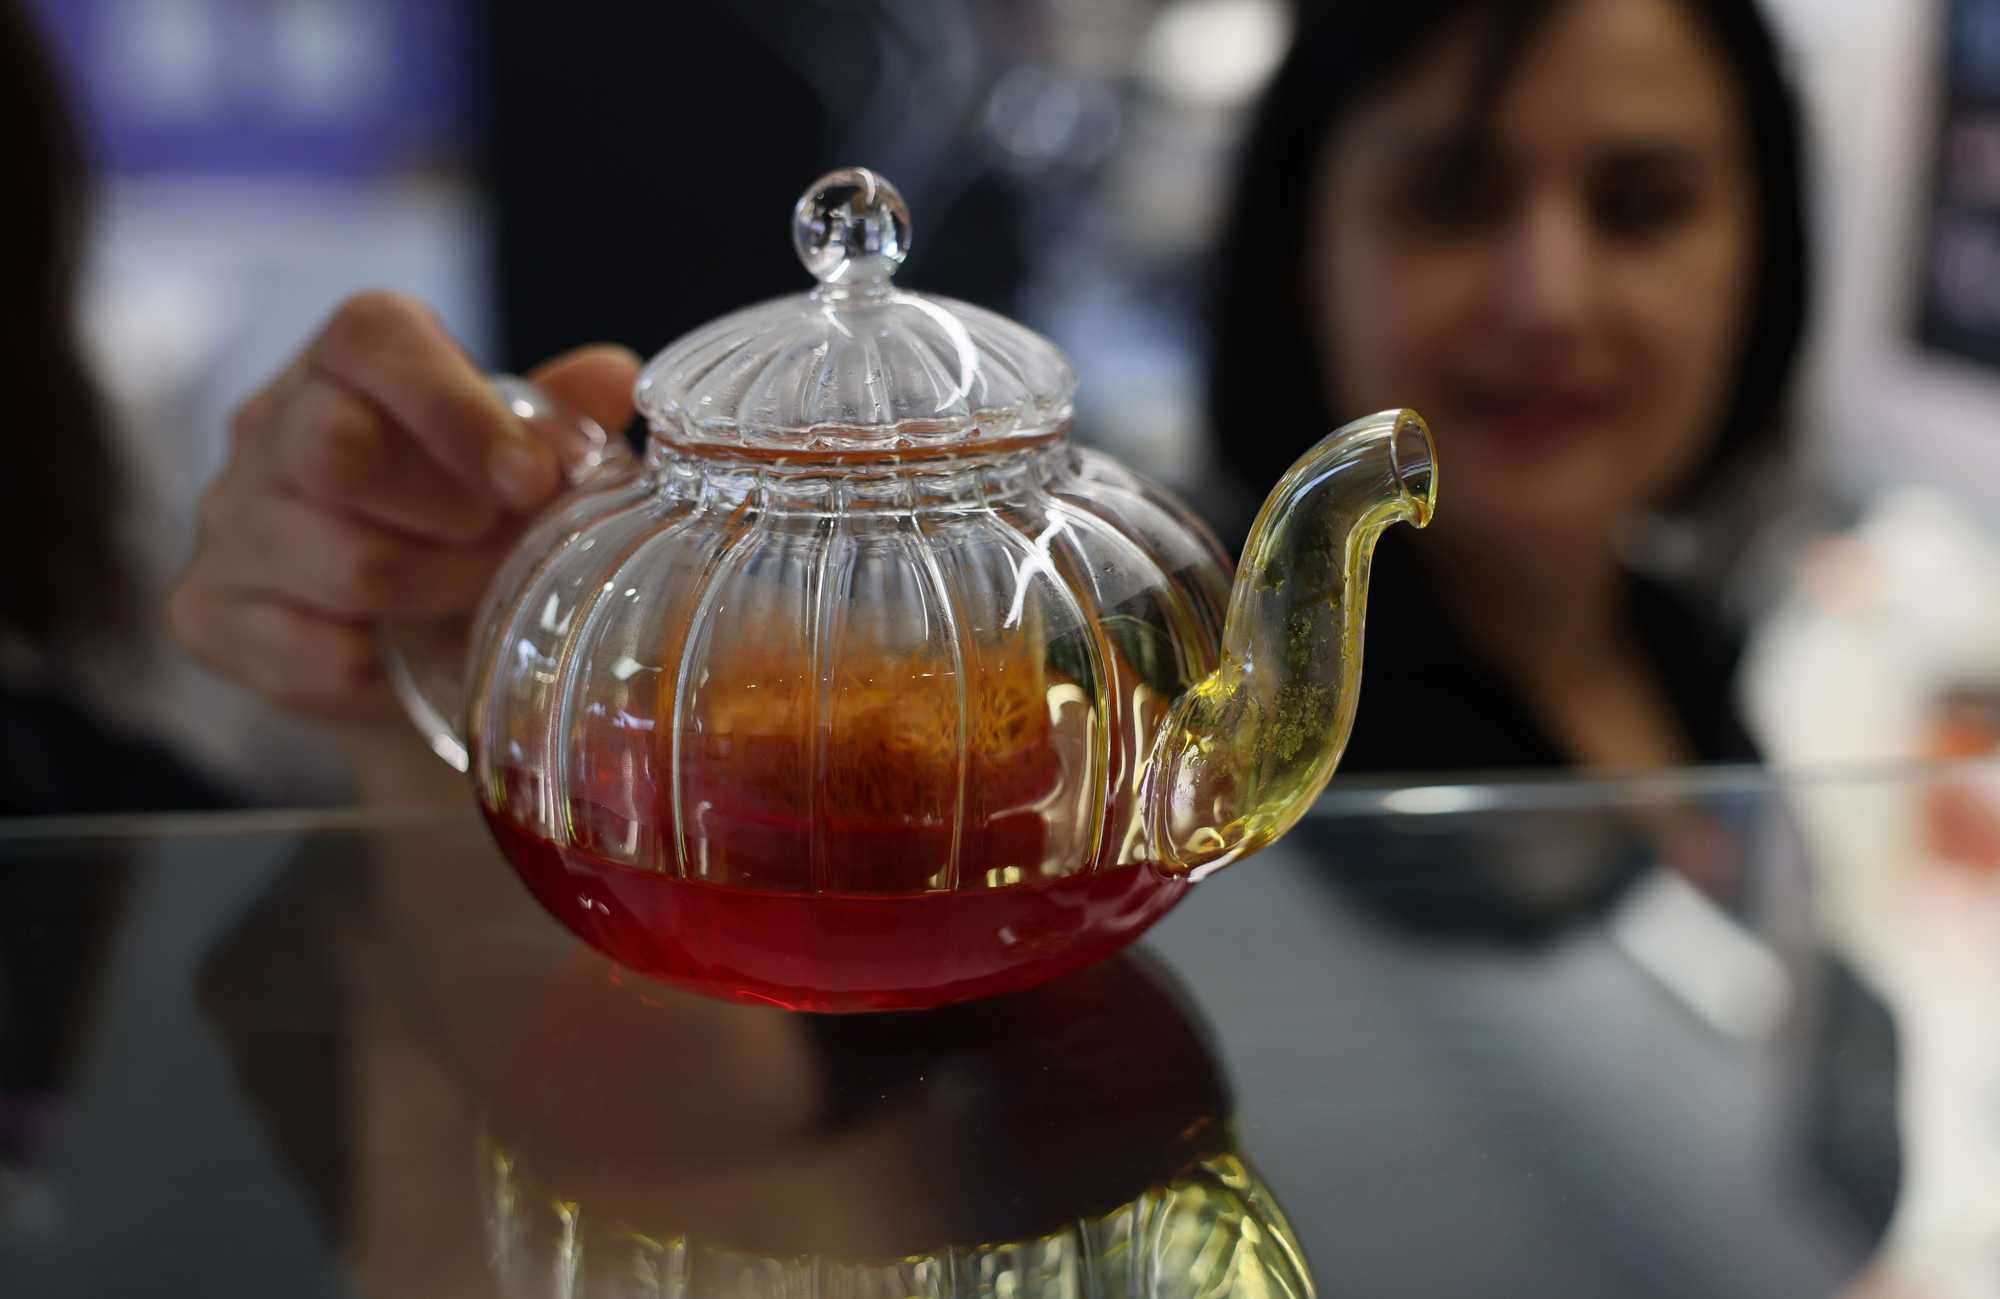 Khatera Shams held a teapot full of saffron that is used for saffron tea.